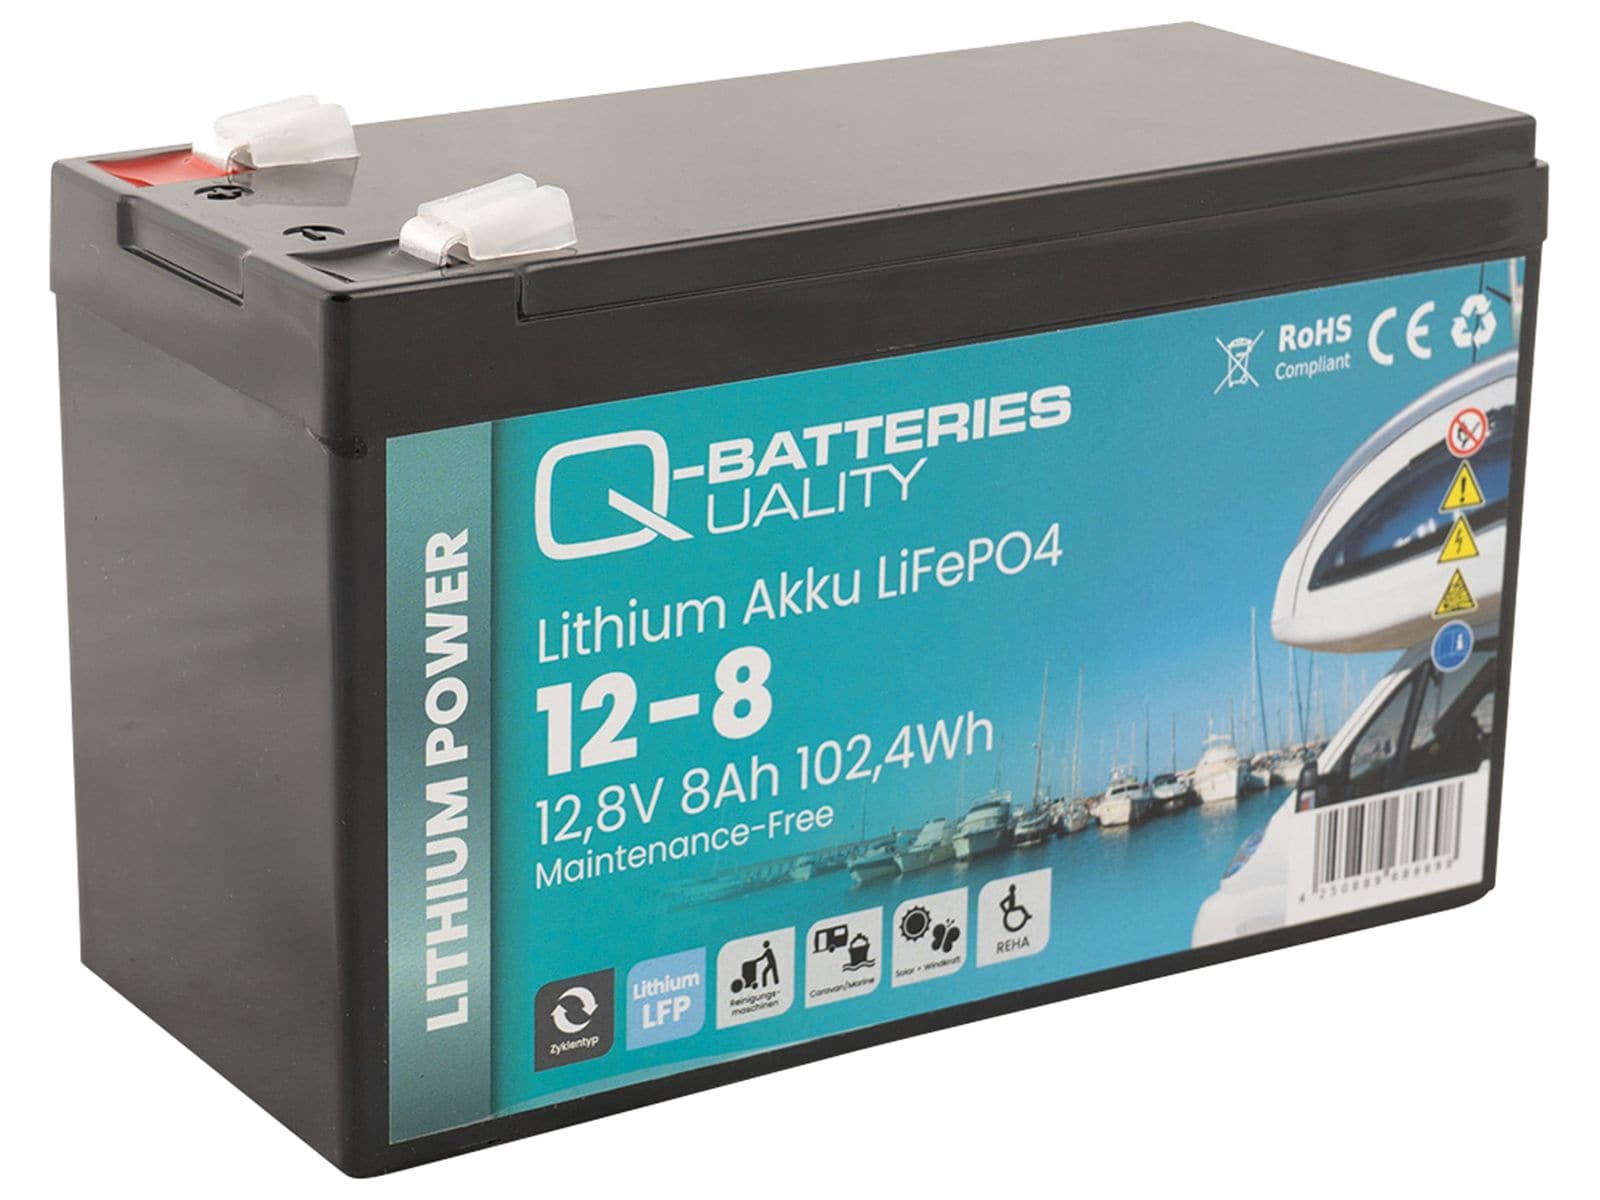 Q-BATTERIES Lithium Akku 12-8 12,8V 8Ah, 102,4Wh LiFePO4 Batterie von Q-Batteries